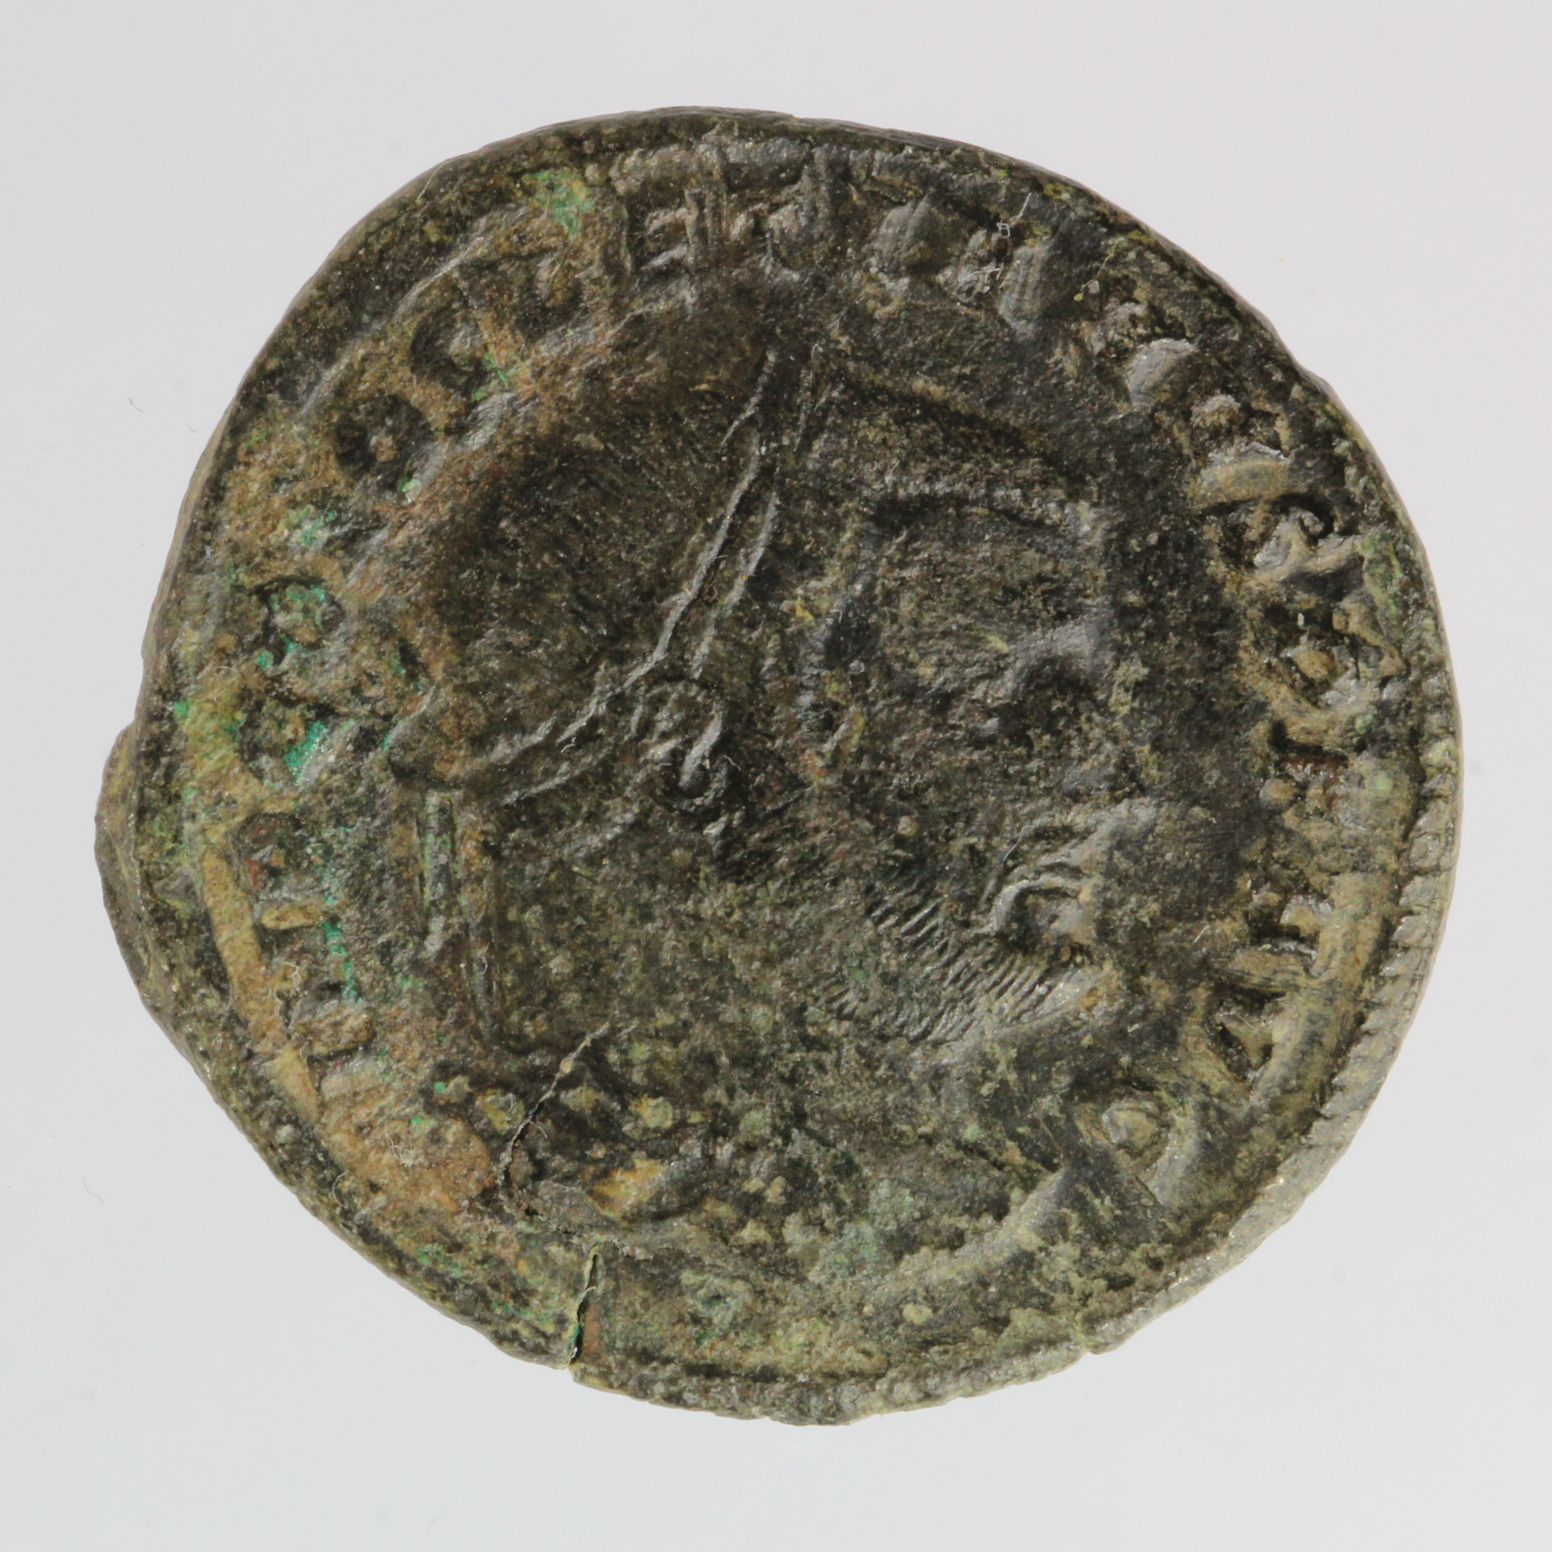 Diocletian billon follis, Rome Mint 302-305 A.D., obverse:- Laureate bust right, reverse reads:- SAC